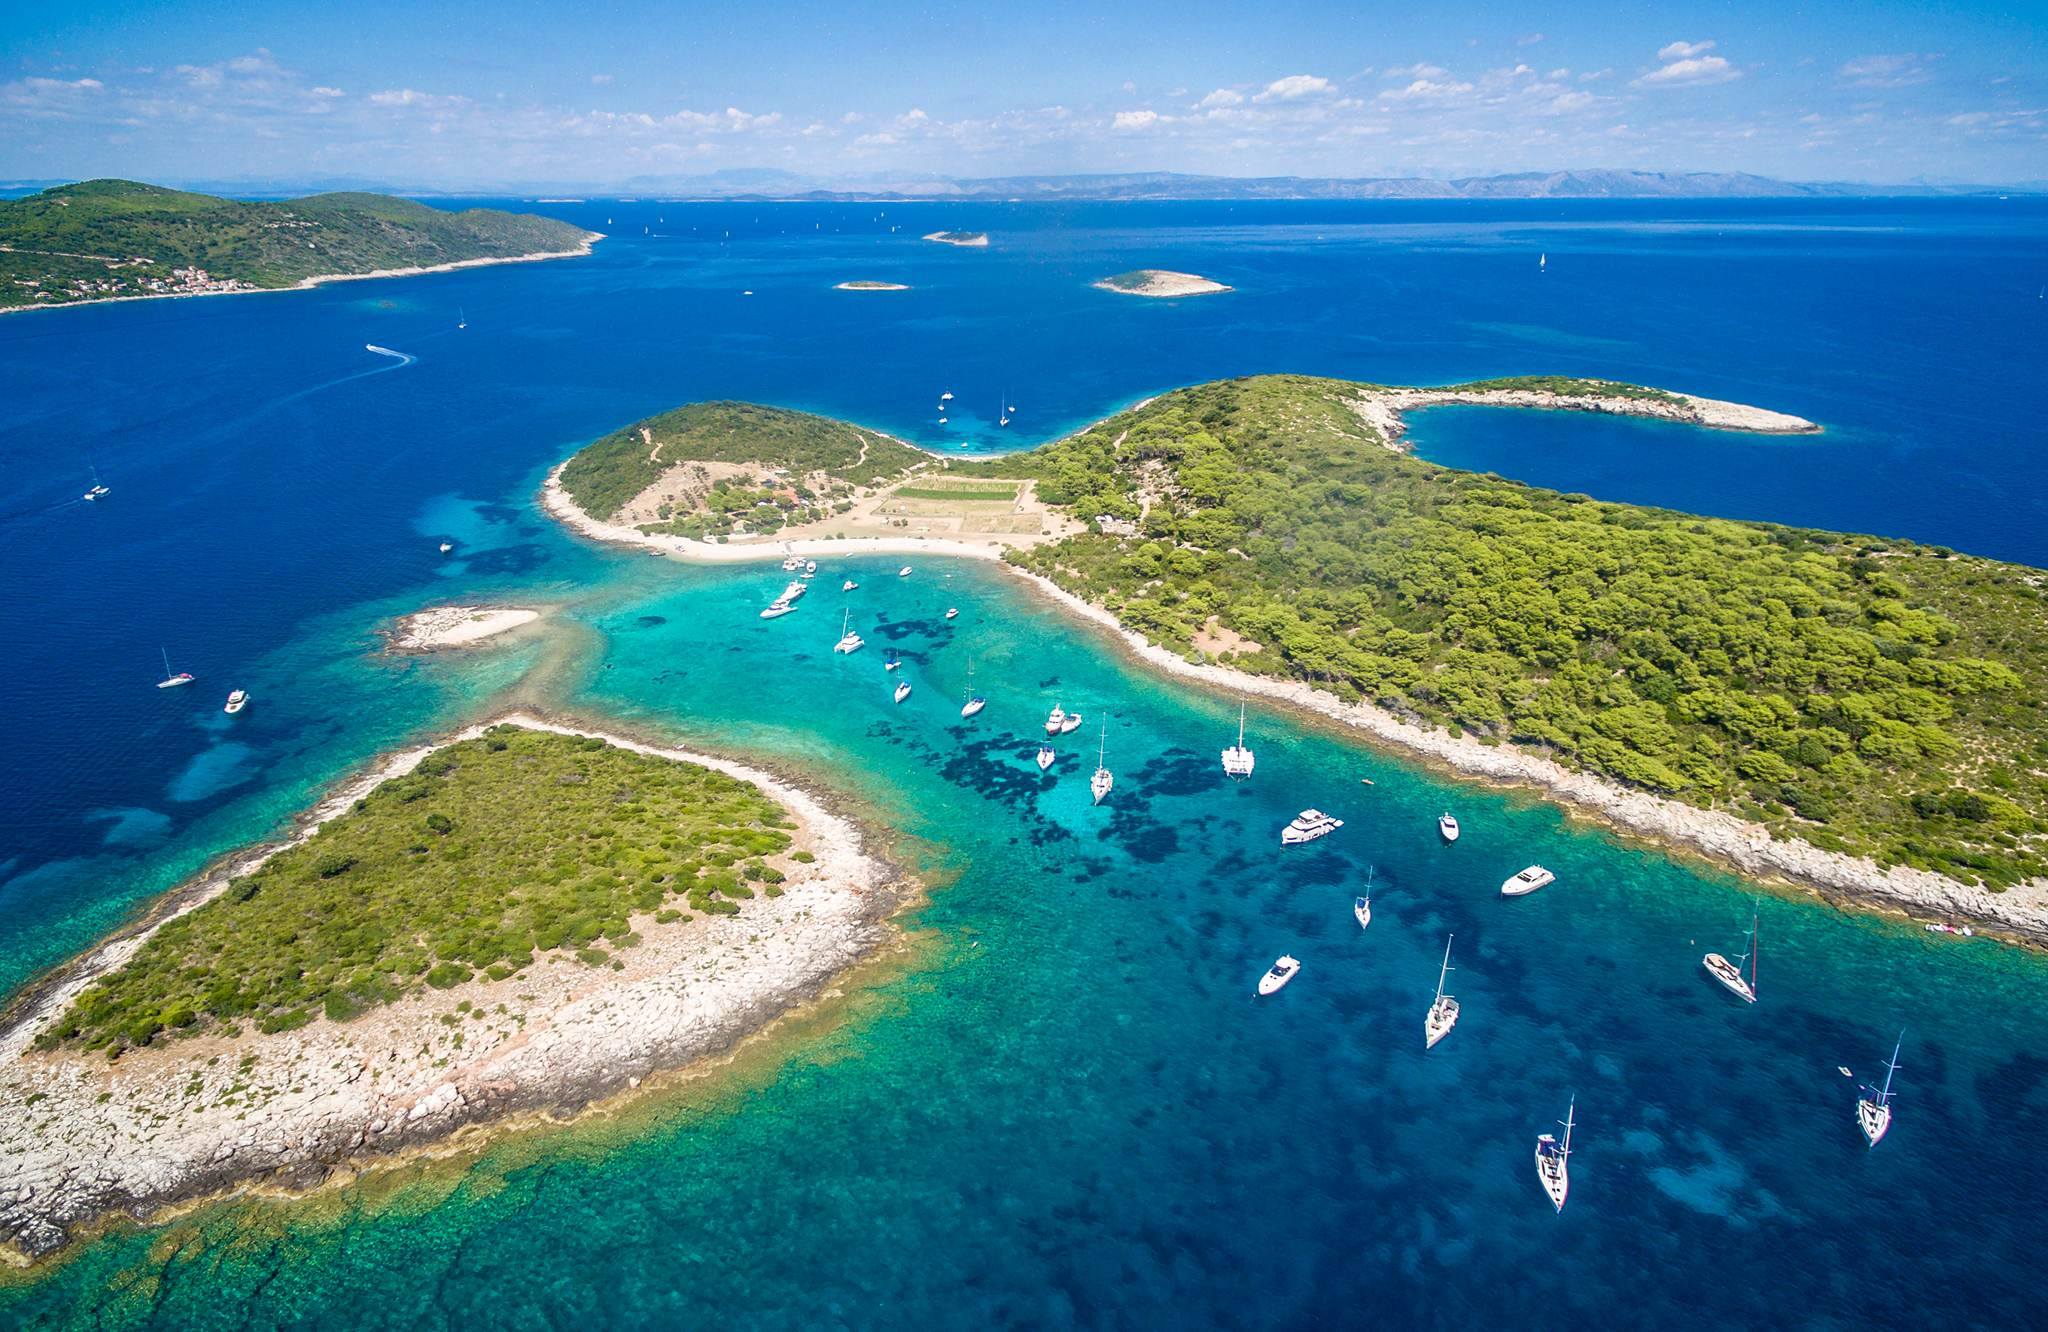 Croatia has over 1,200 islands (photo credit: Ante Babic)